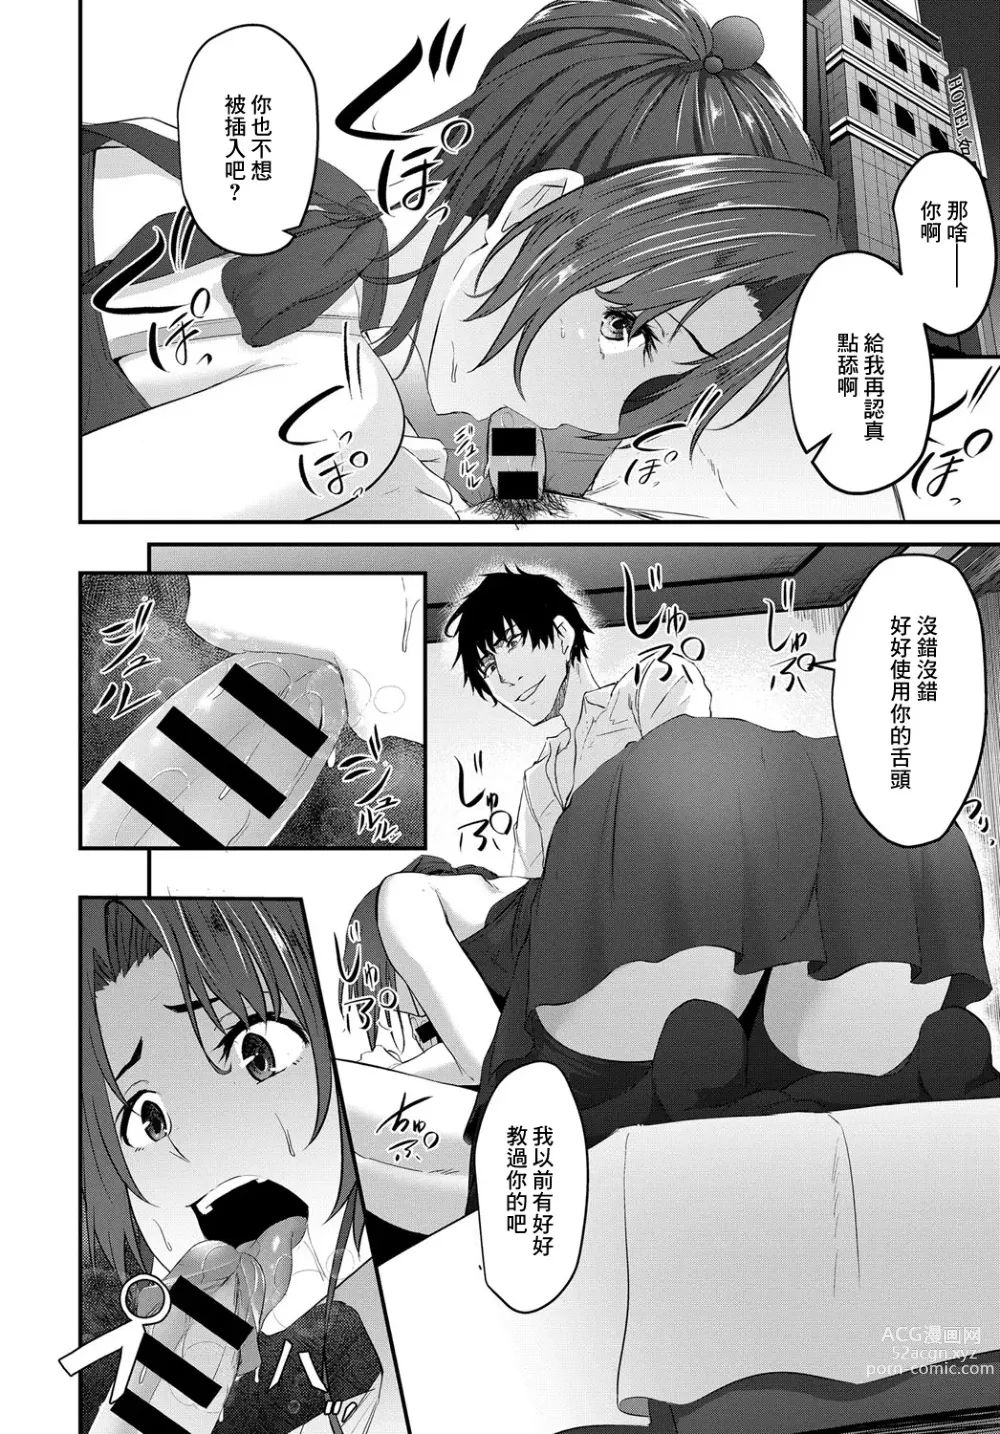 Page 8 of manga Dousoukai no Ato de